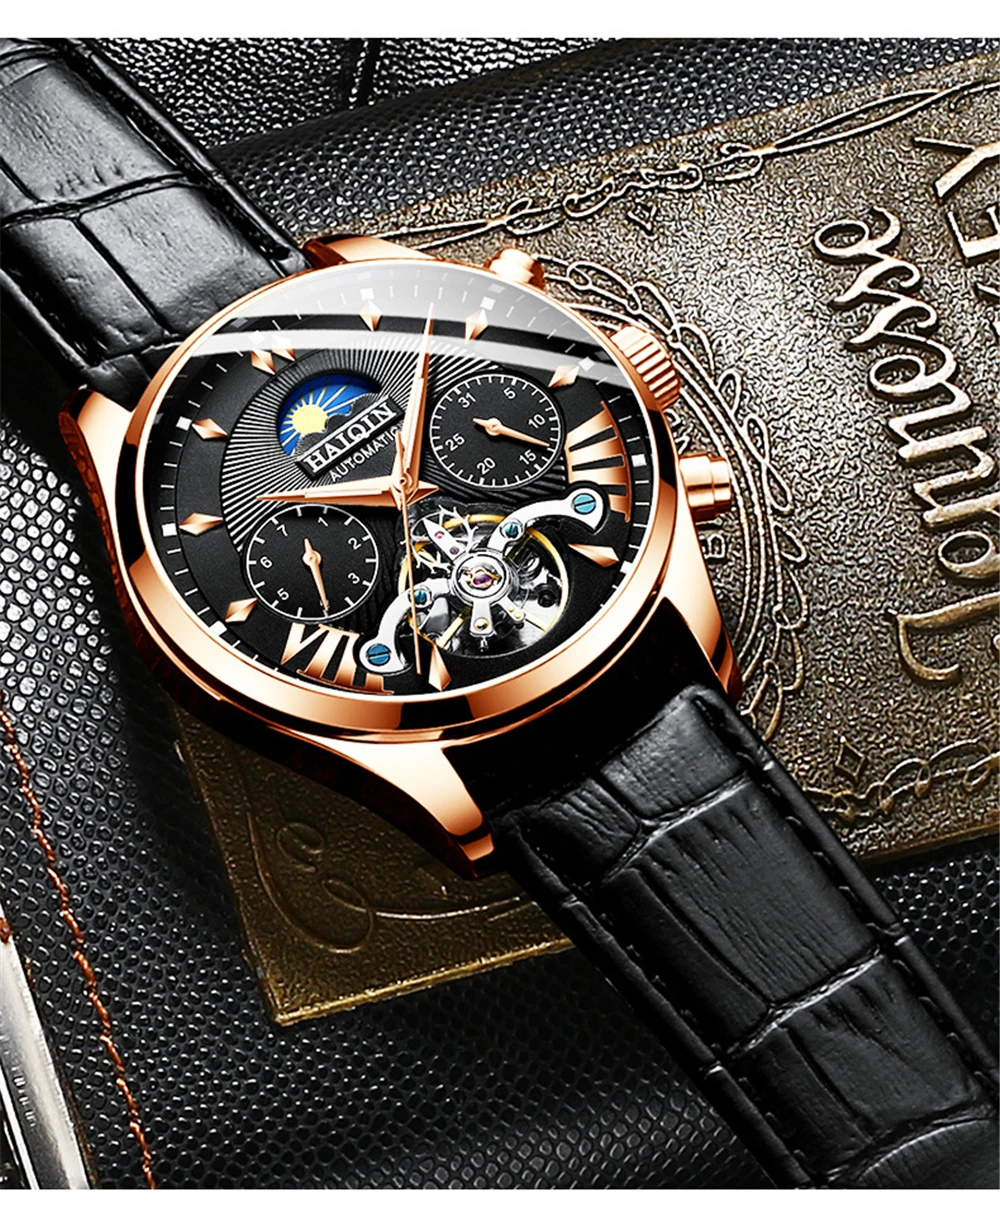 Haiqin masculinomasculino relógios marca superior luxo automáticomecânicorelógio